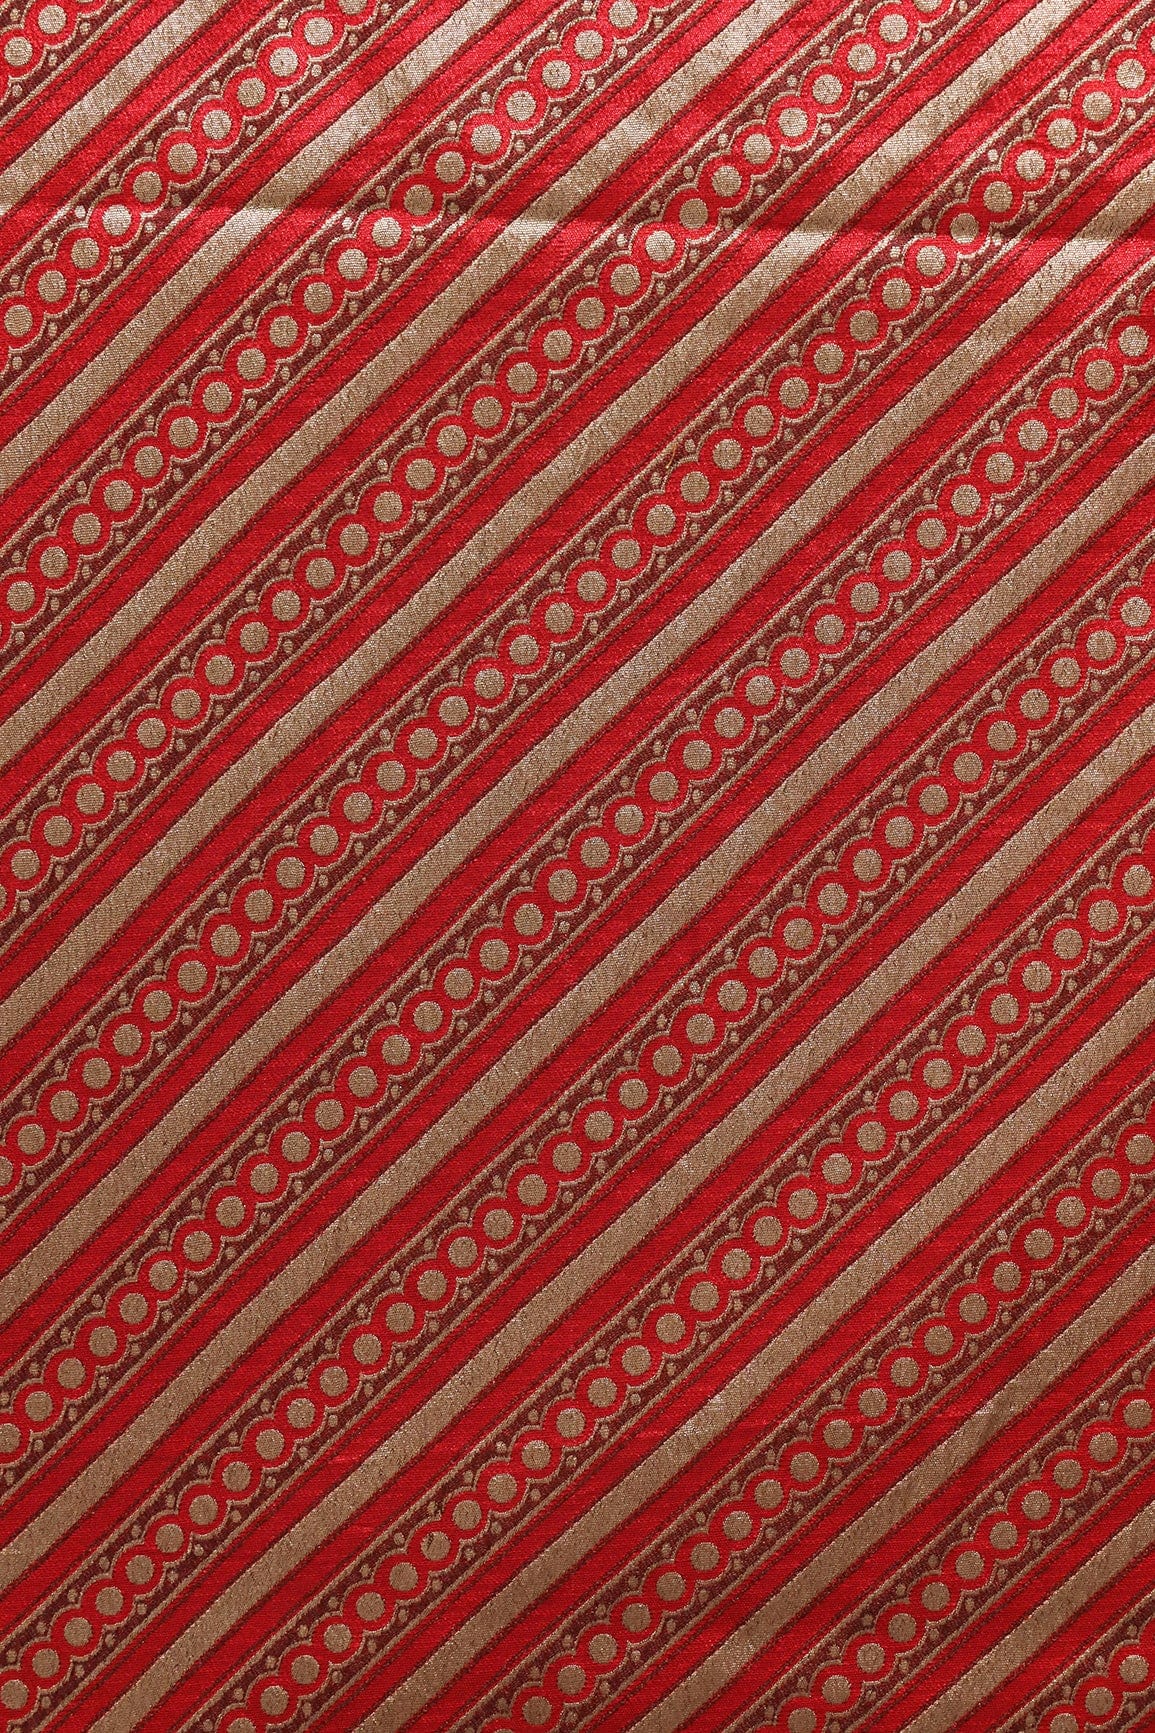 doeraa Banarasi Fabrics Red And Beige Stripes Silk Satin Jute Banarasi Jacquard Fabric